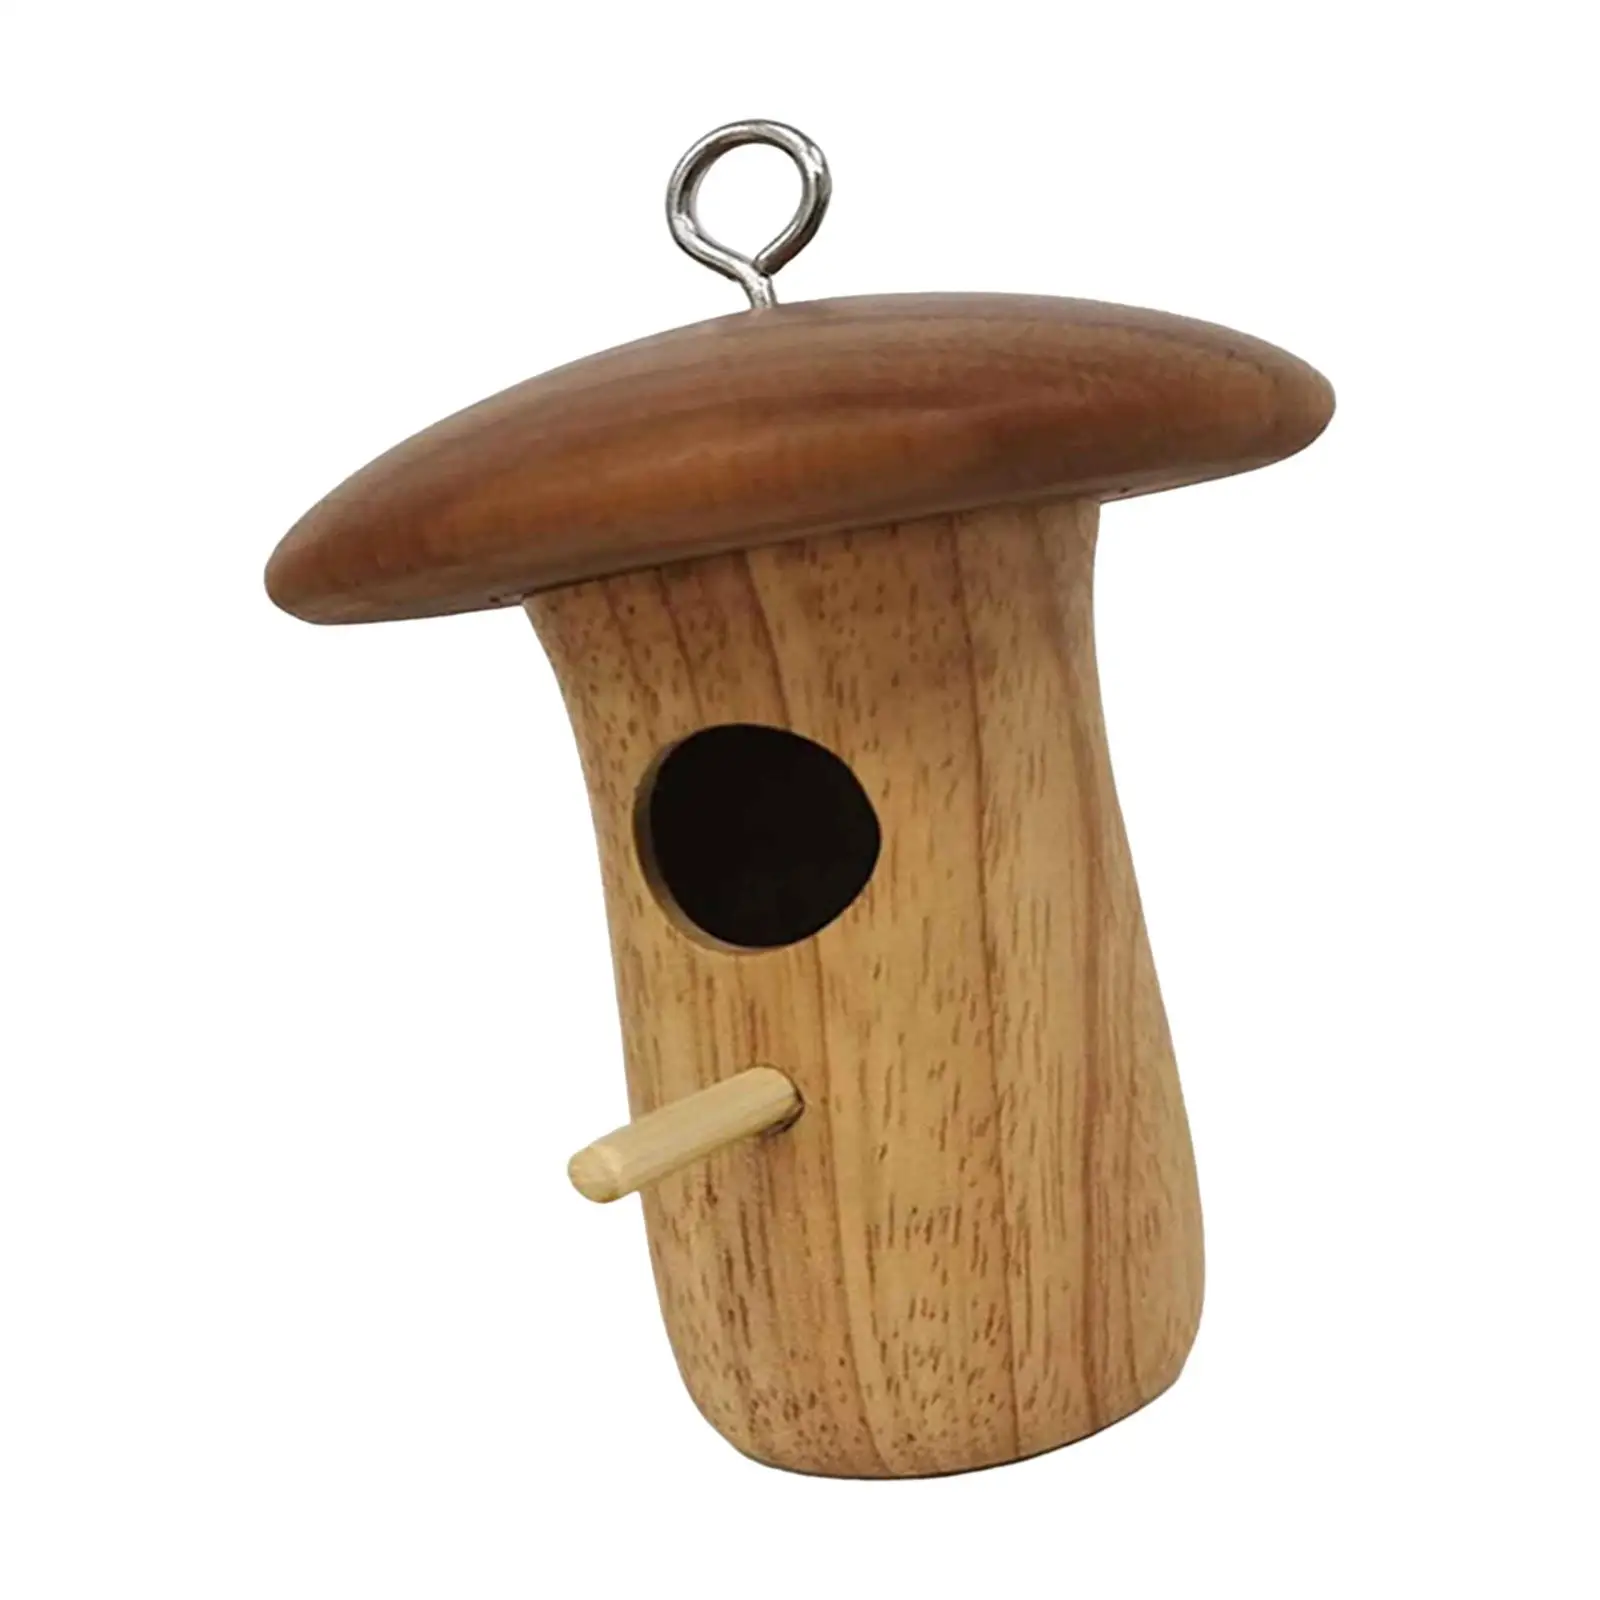 Hummingbird House Pet Accessories Hummingbird Nest for Outdoor Feeding Home